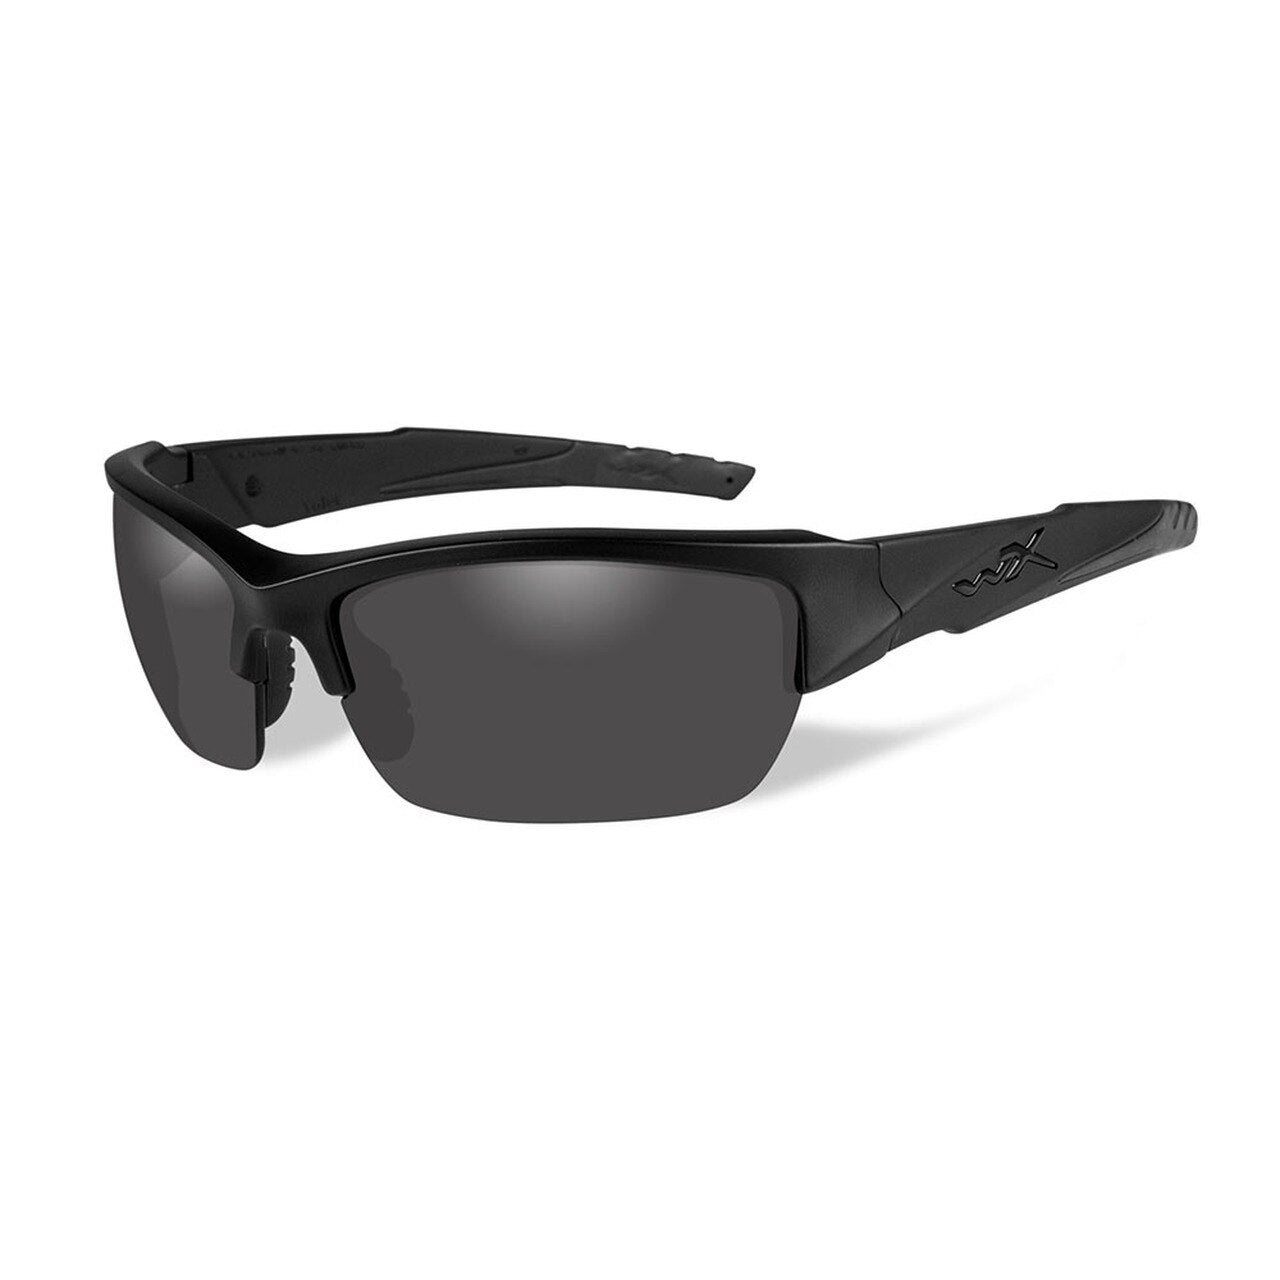 Wiley X Valor Sunglasses Polarised Grey Lens Matte Black Frame Tactical Distributors Ltd New Zealand